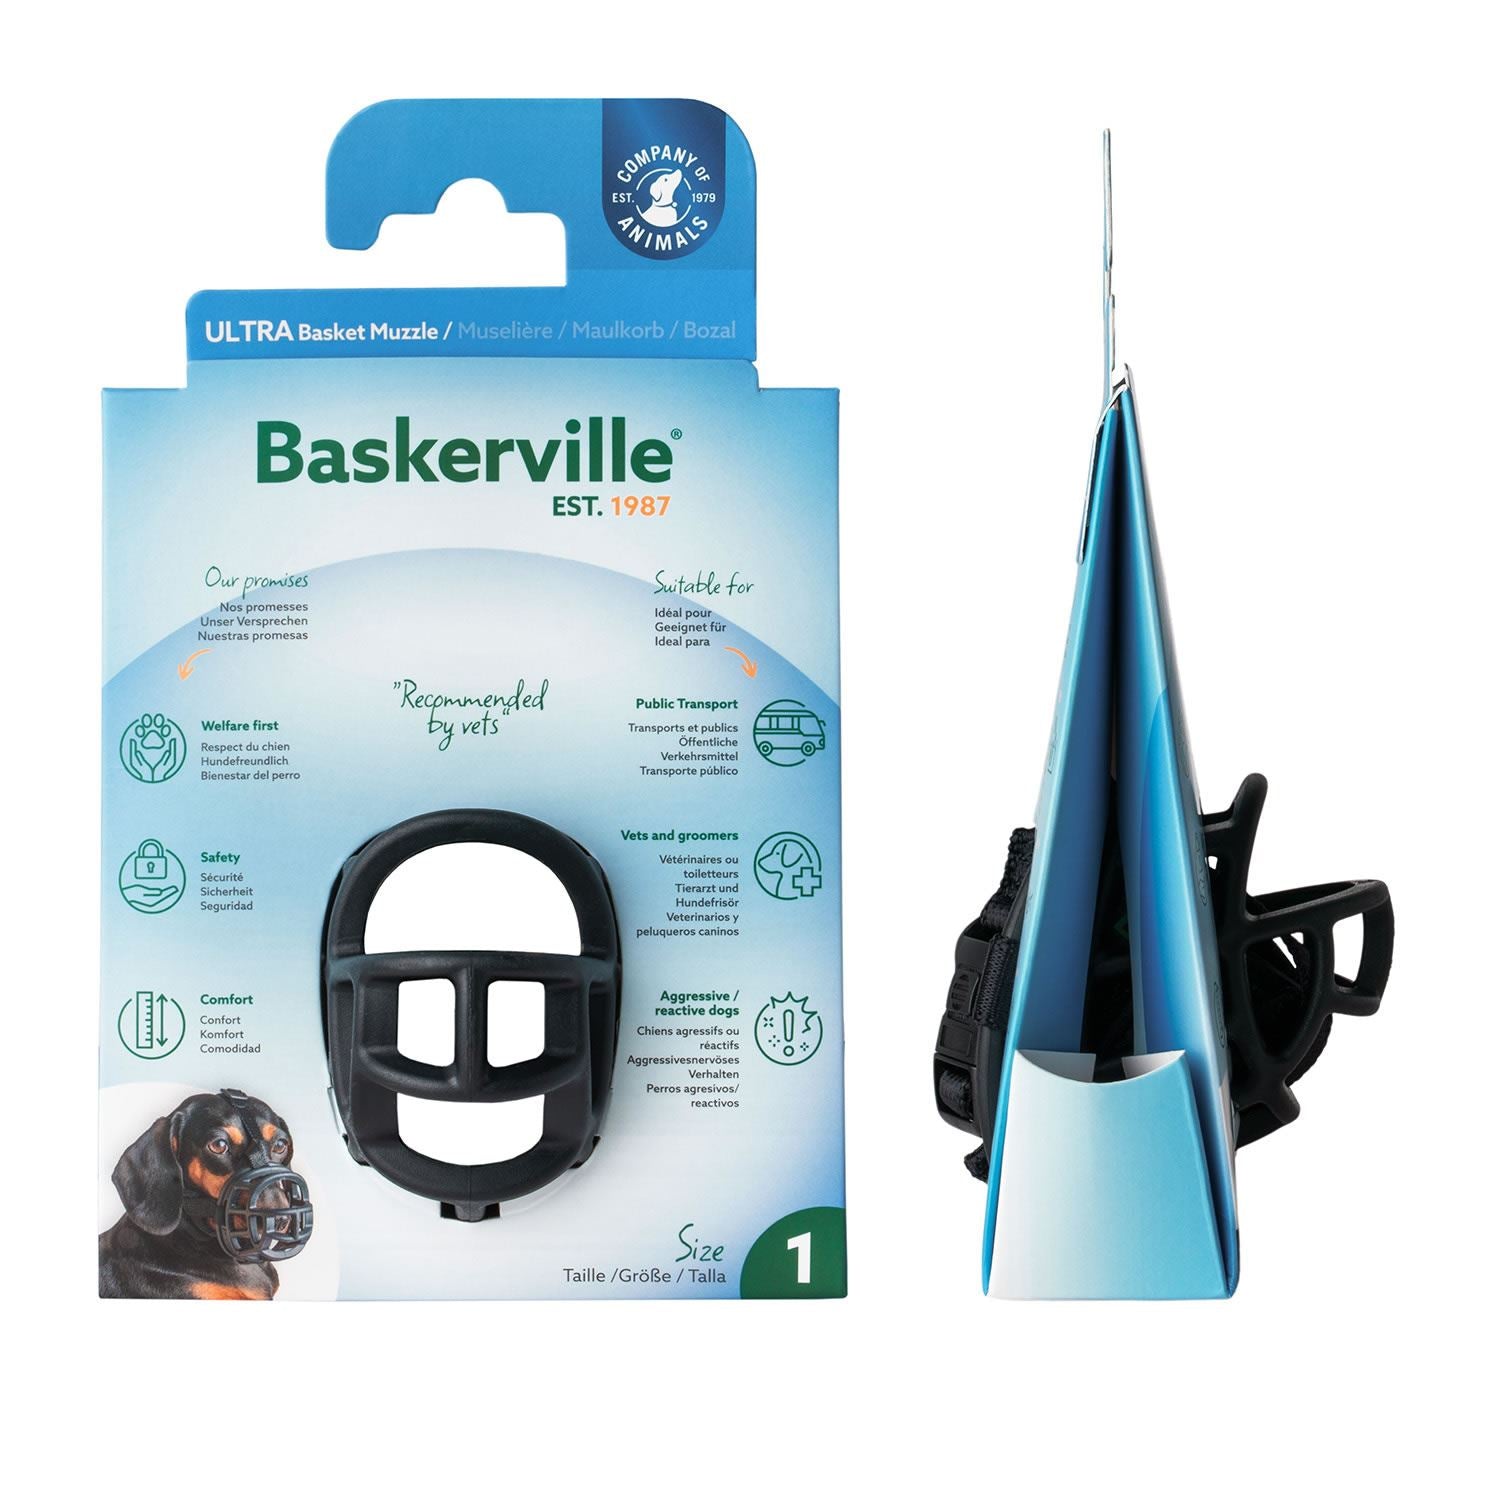 Baskerville Ultra Basket Muzzle - Just Horse Riders